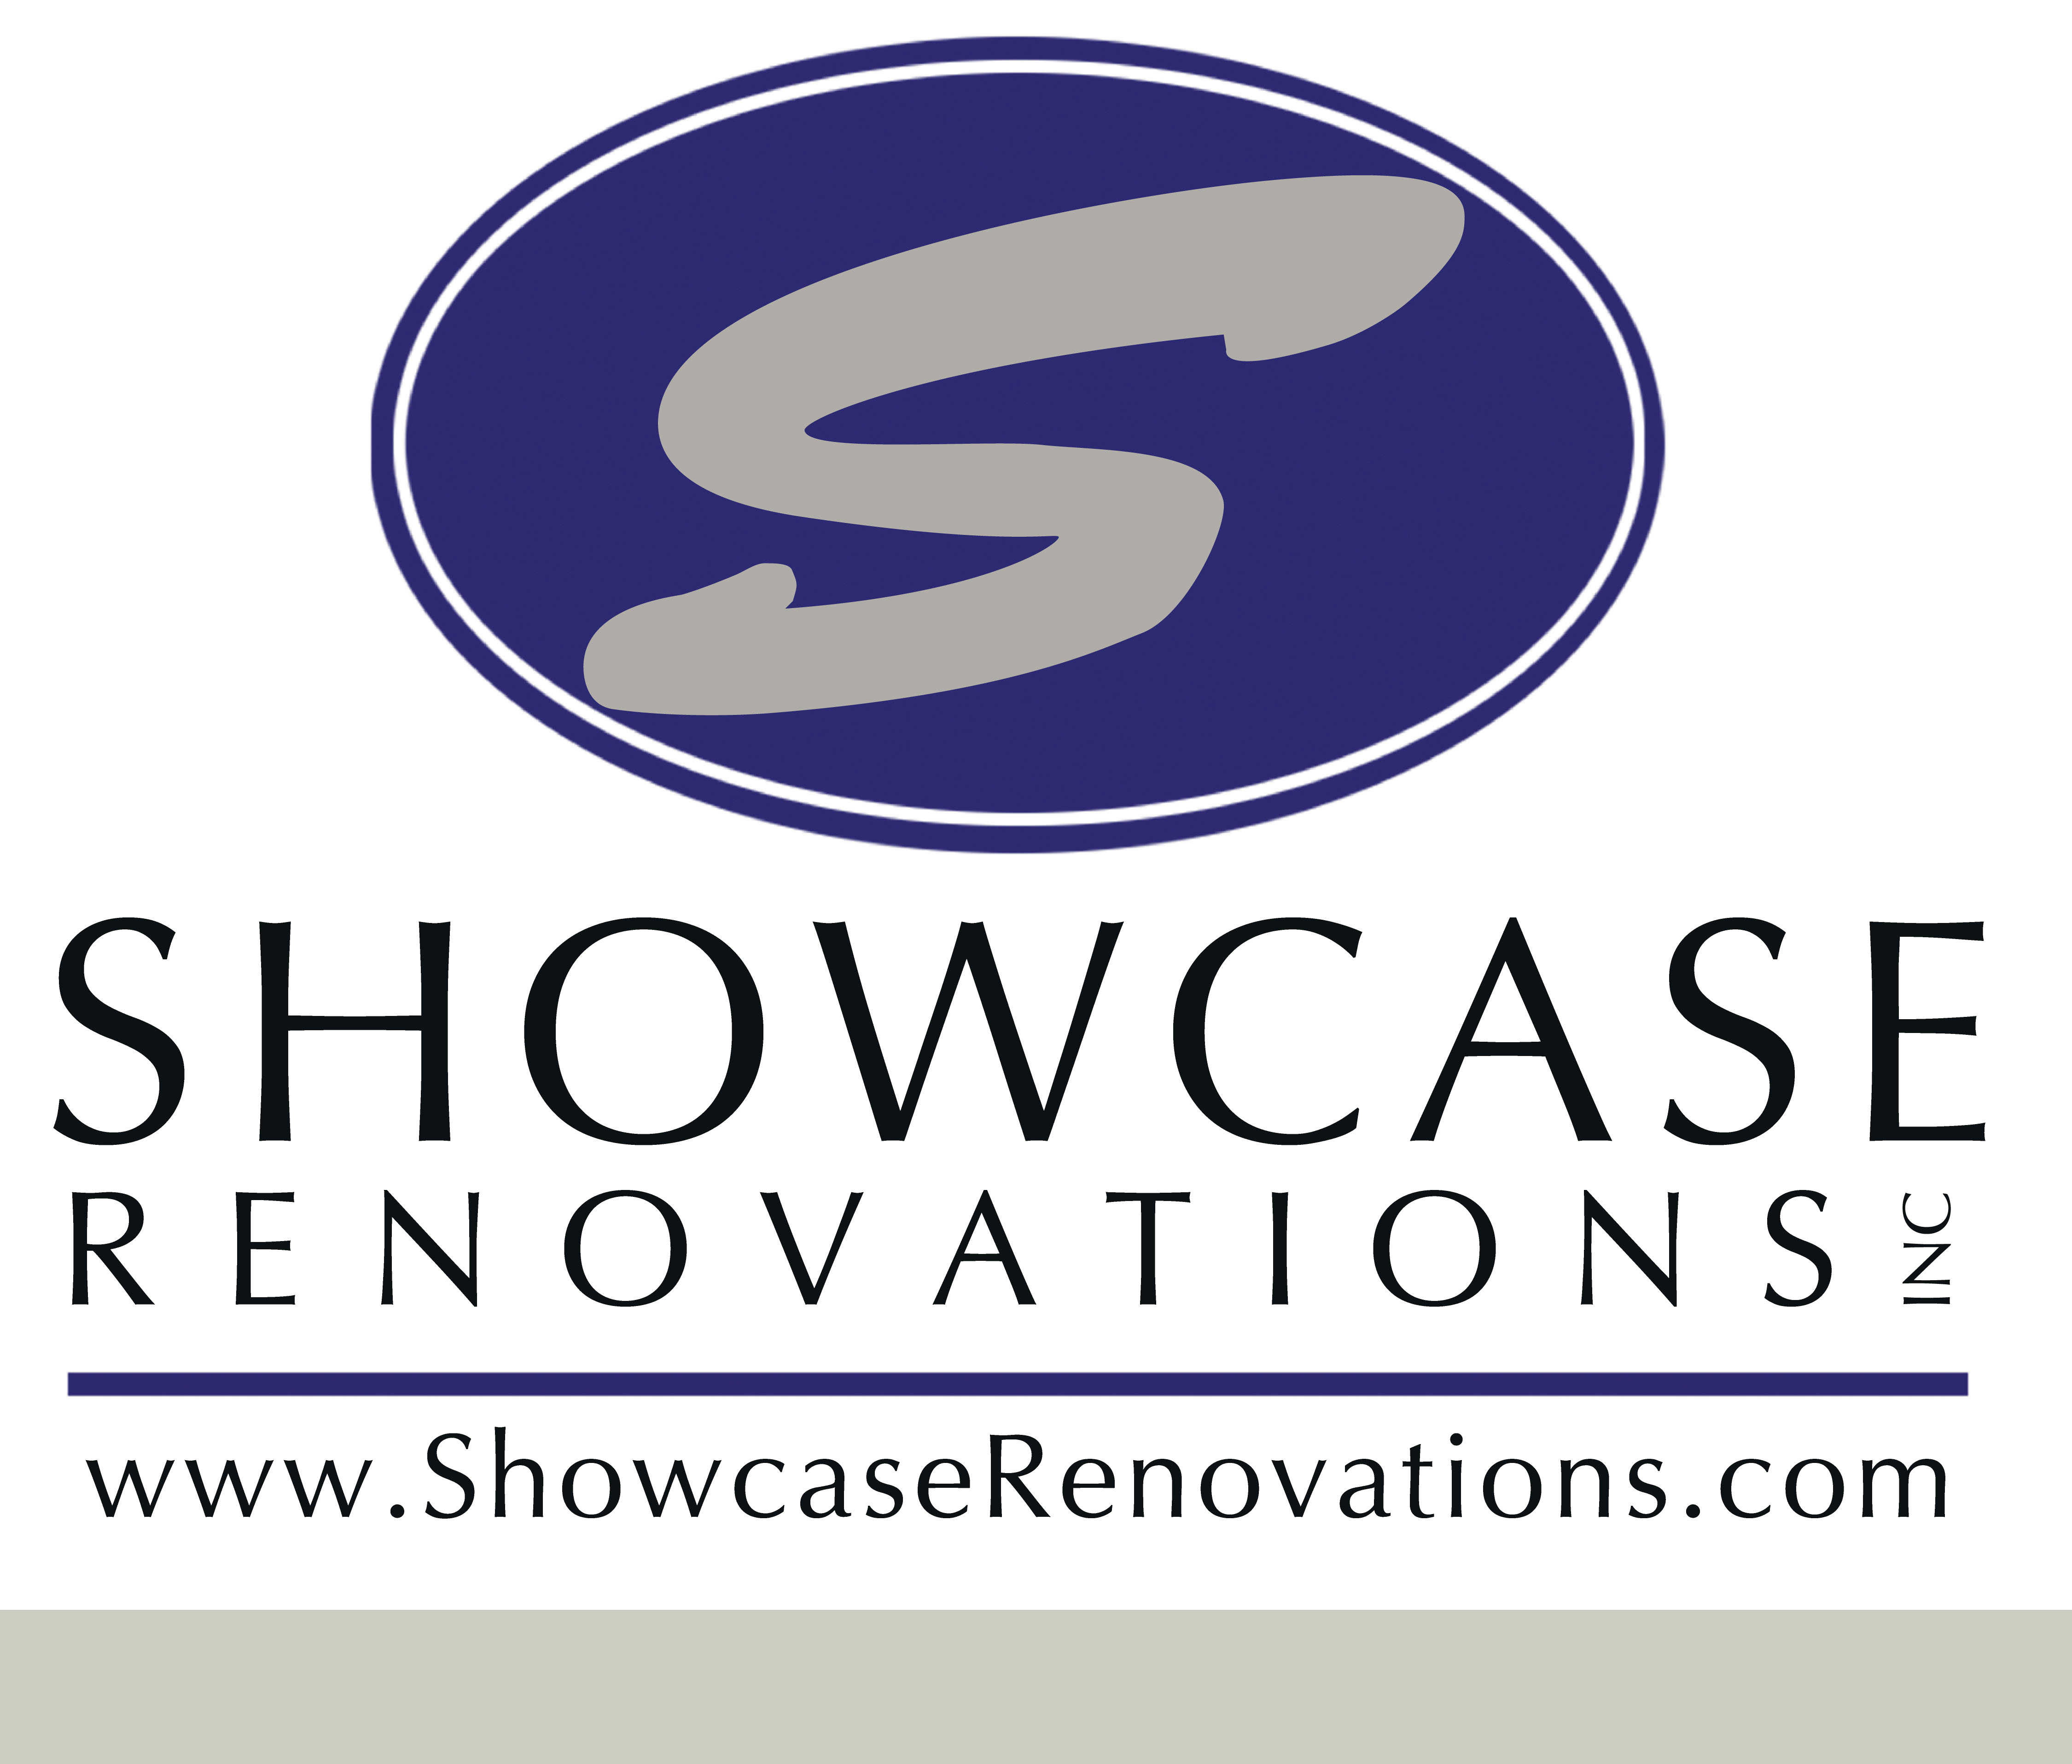 Showcase Renovations, Inc. company logo